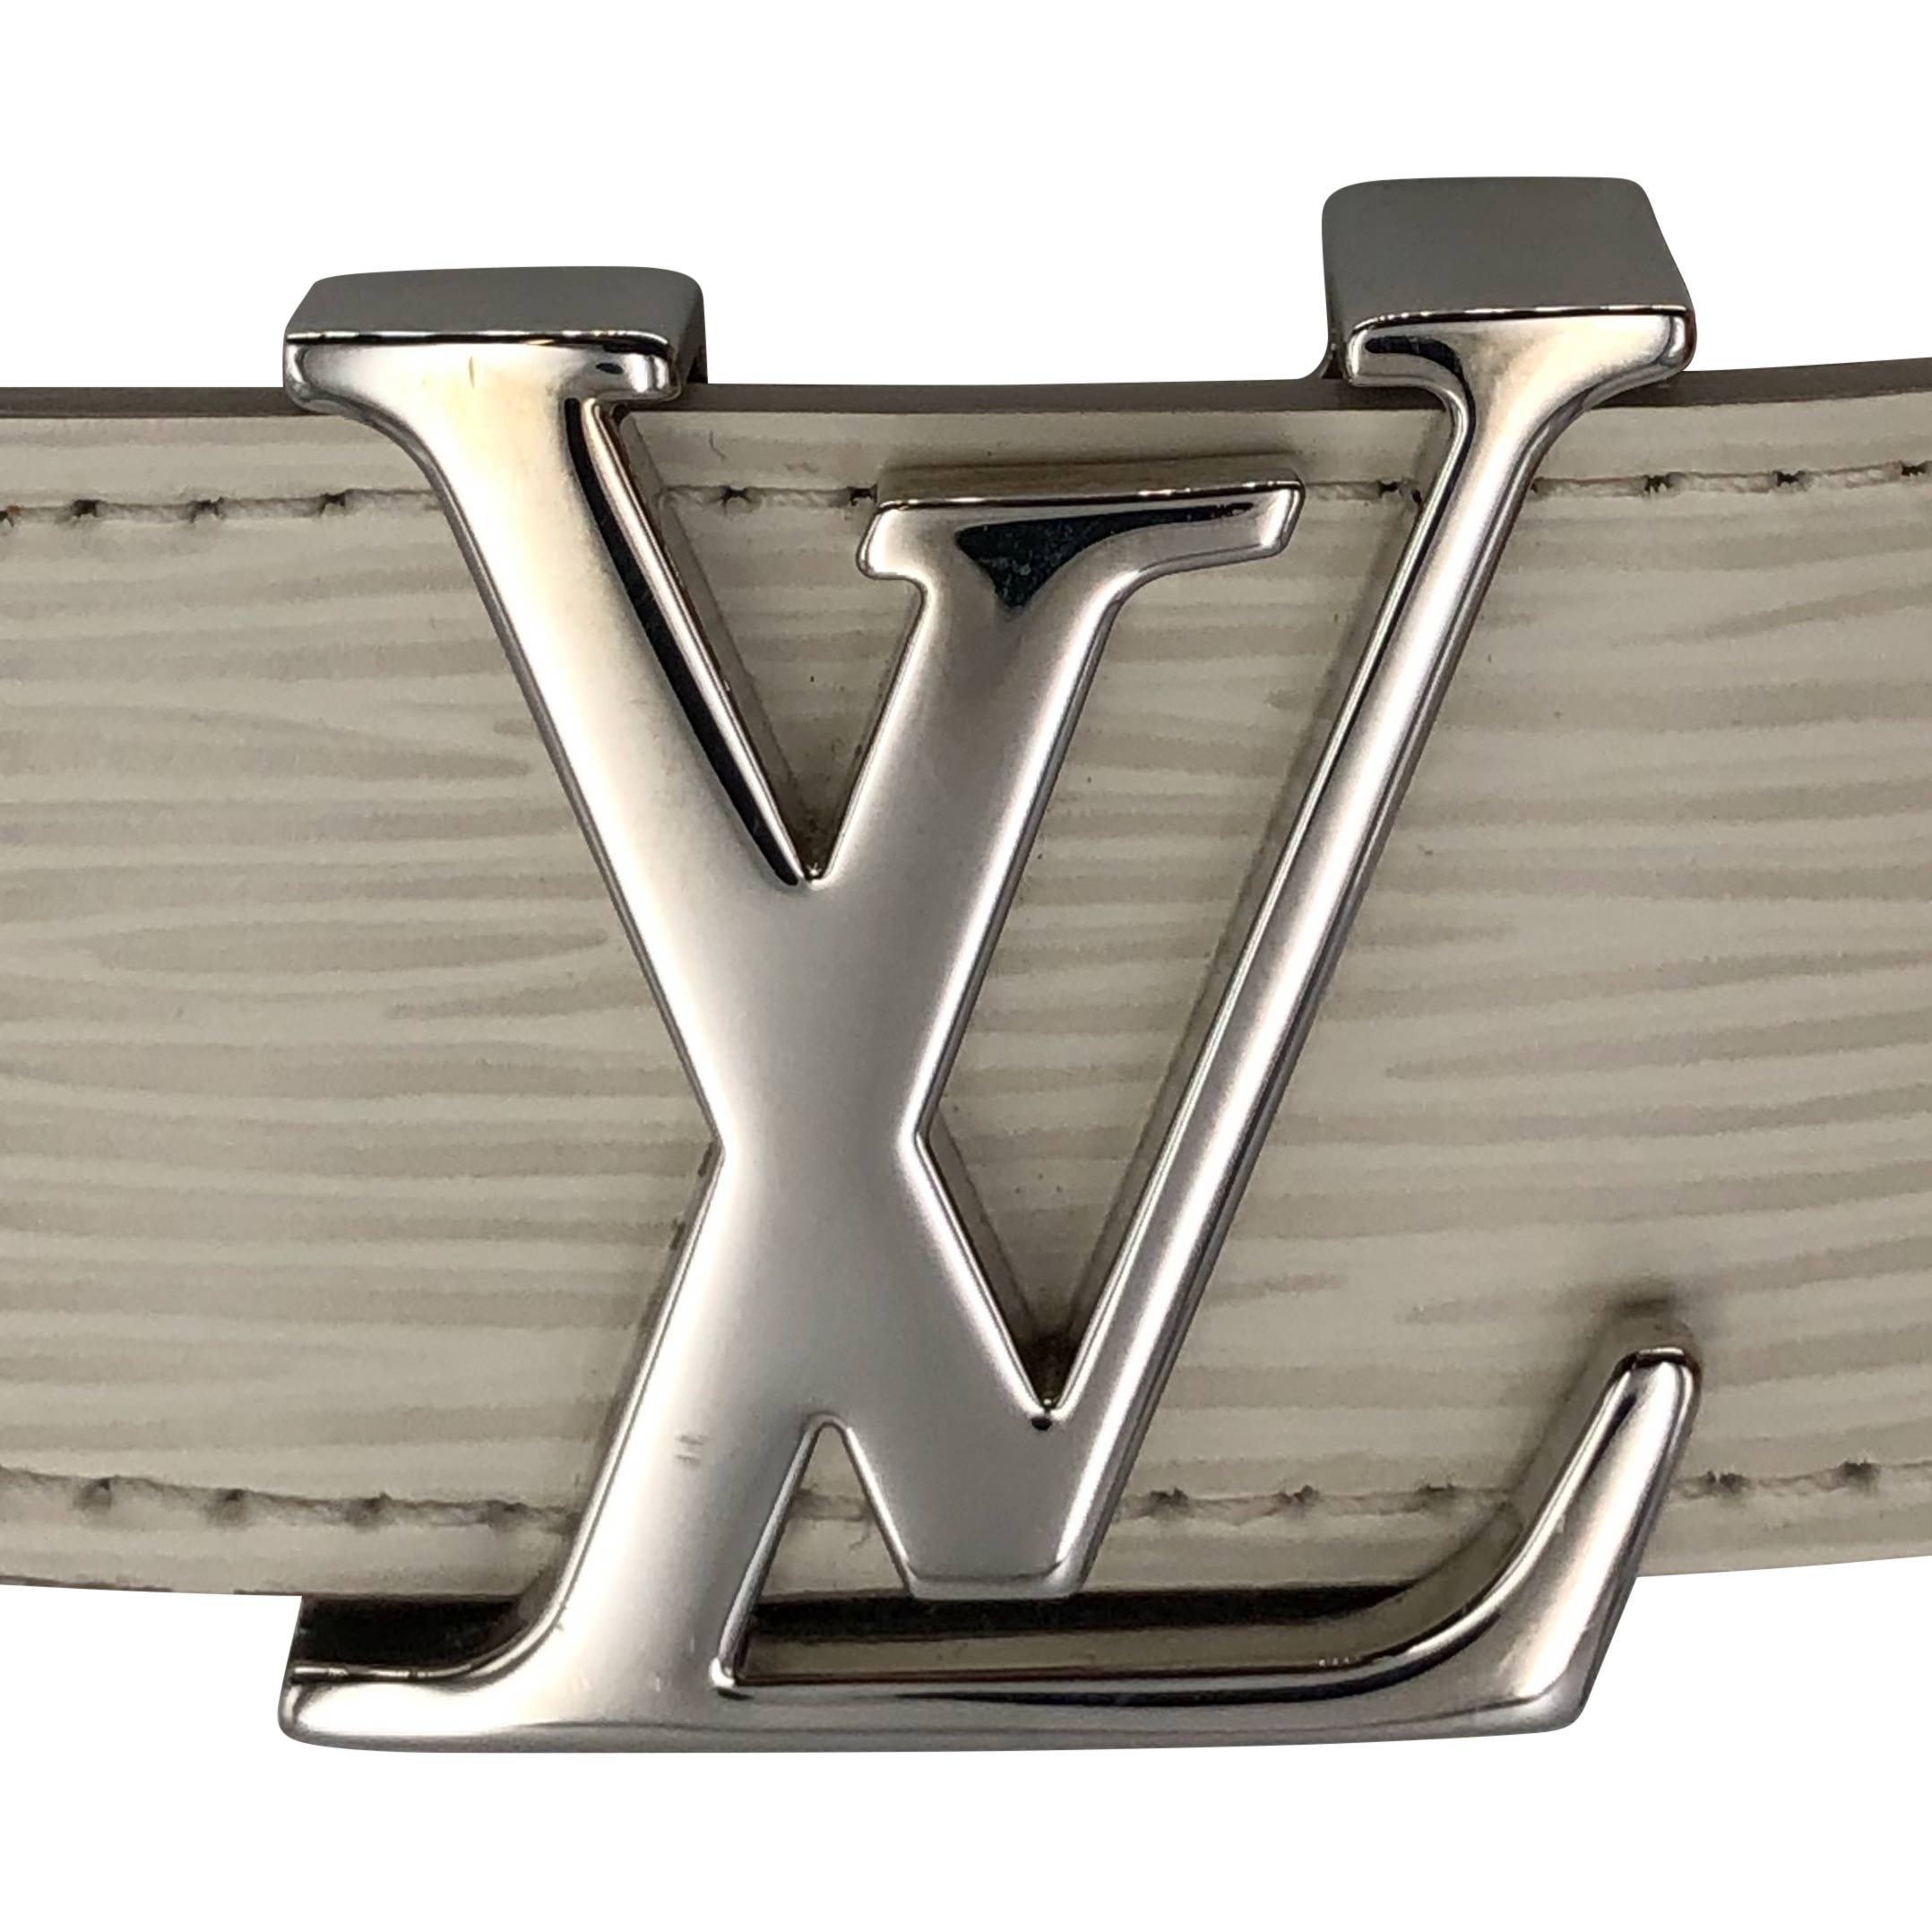 Cream Louis Vuitton Belt - For Sale on 1stDibs  cream lv belt, louis  vuitton cream belt, lv belt cream